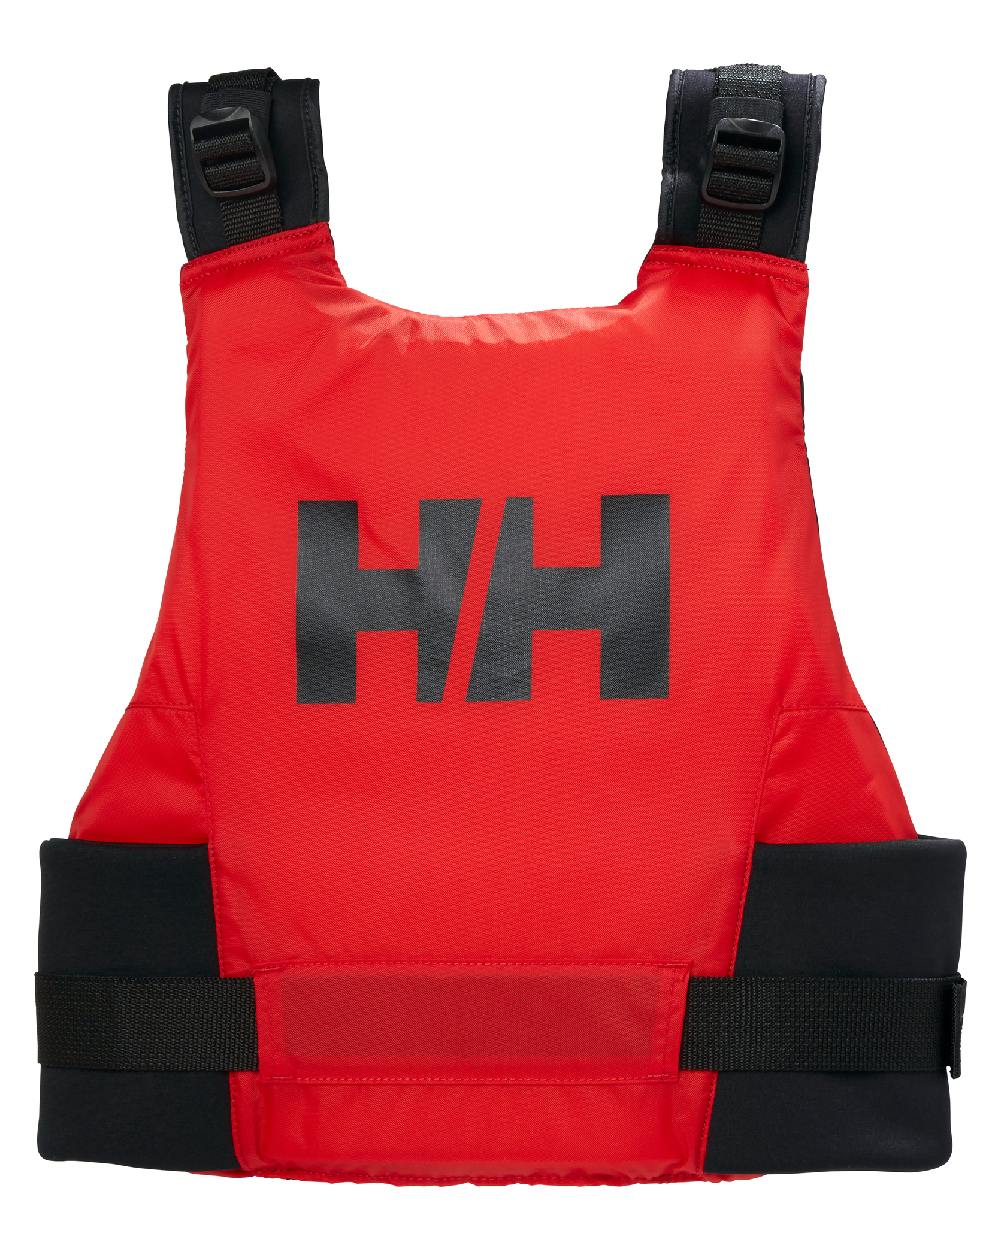 Alert Red coloured Helly Hansen Rider Paddle Life Vest on white background 